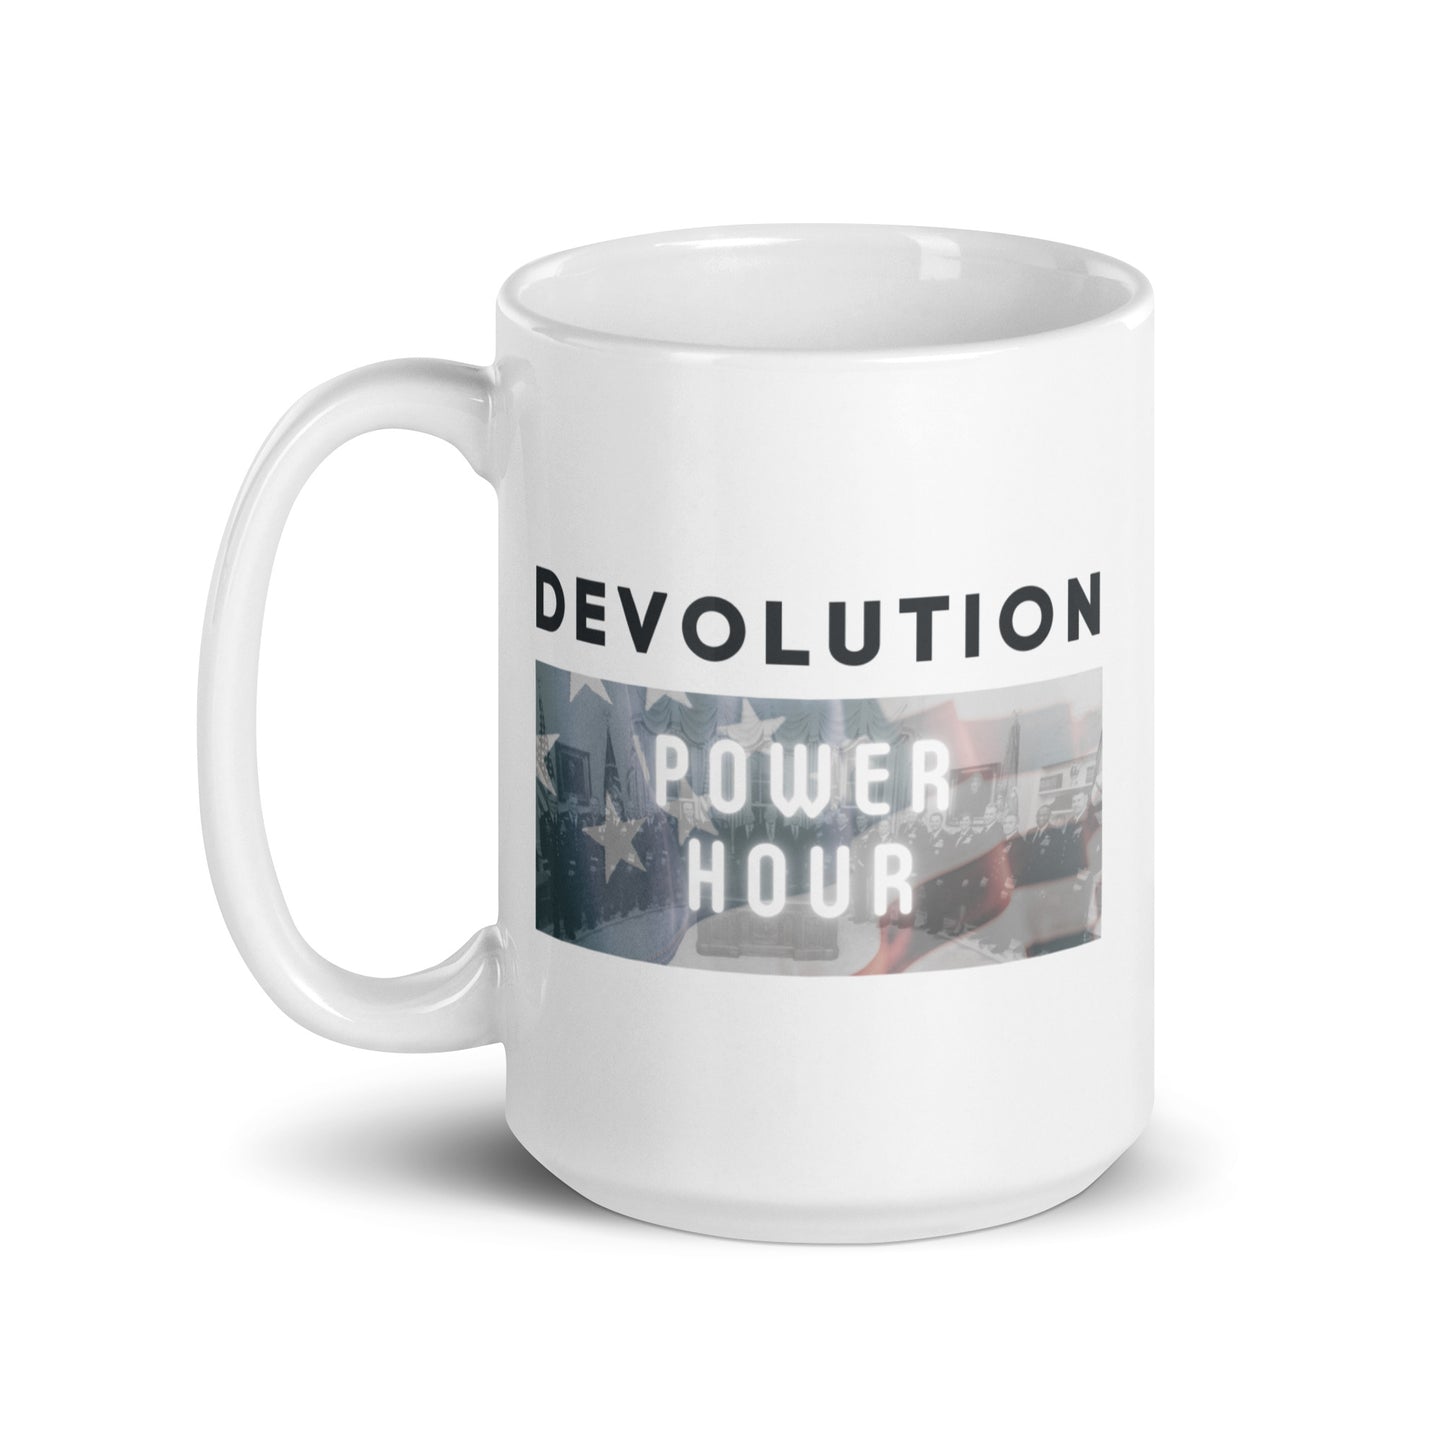 Devolution Power Hour White glossy mug